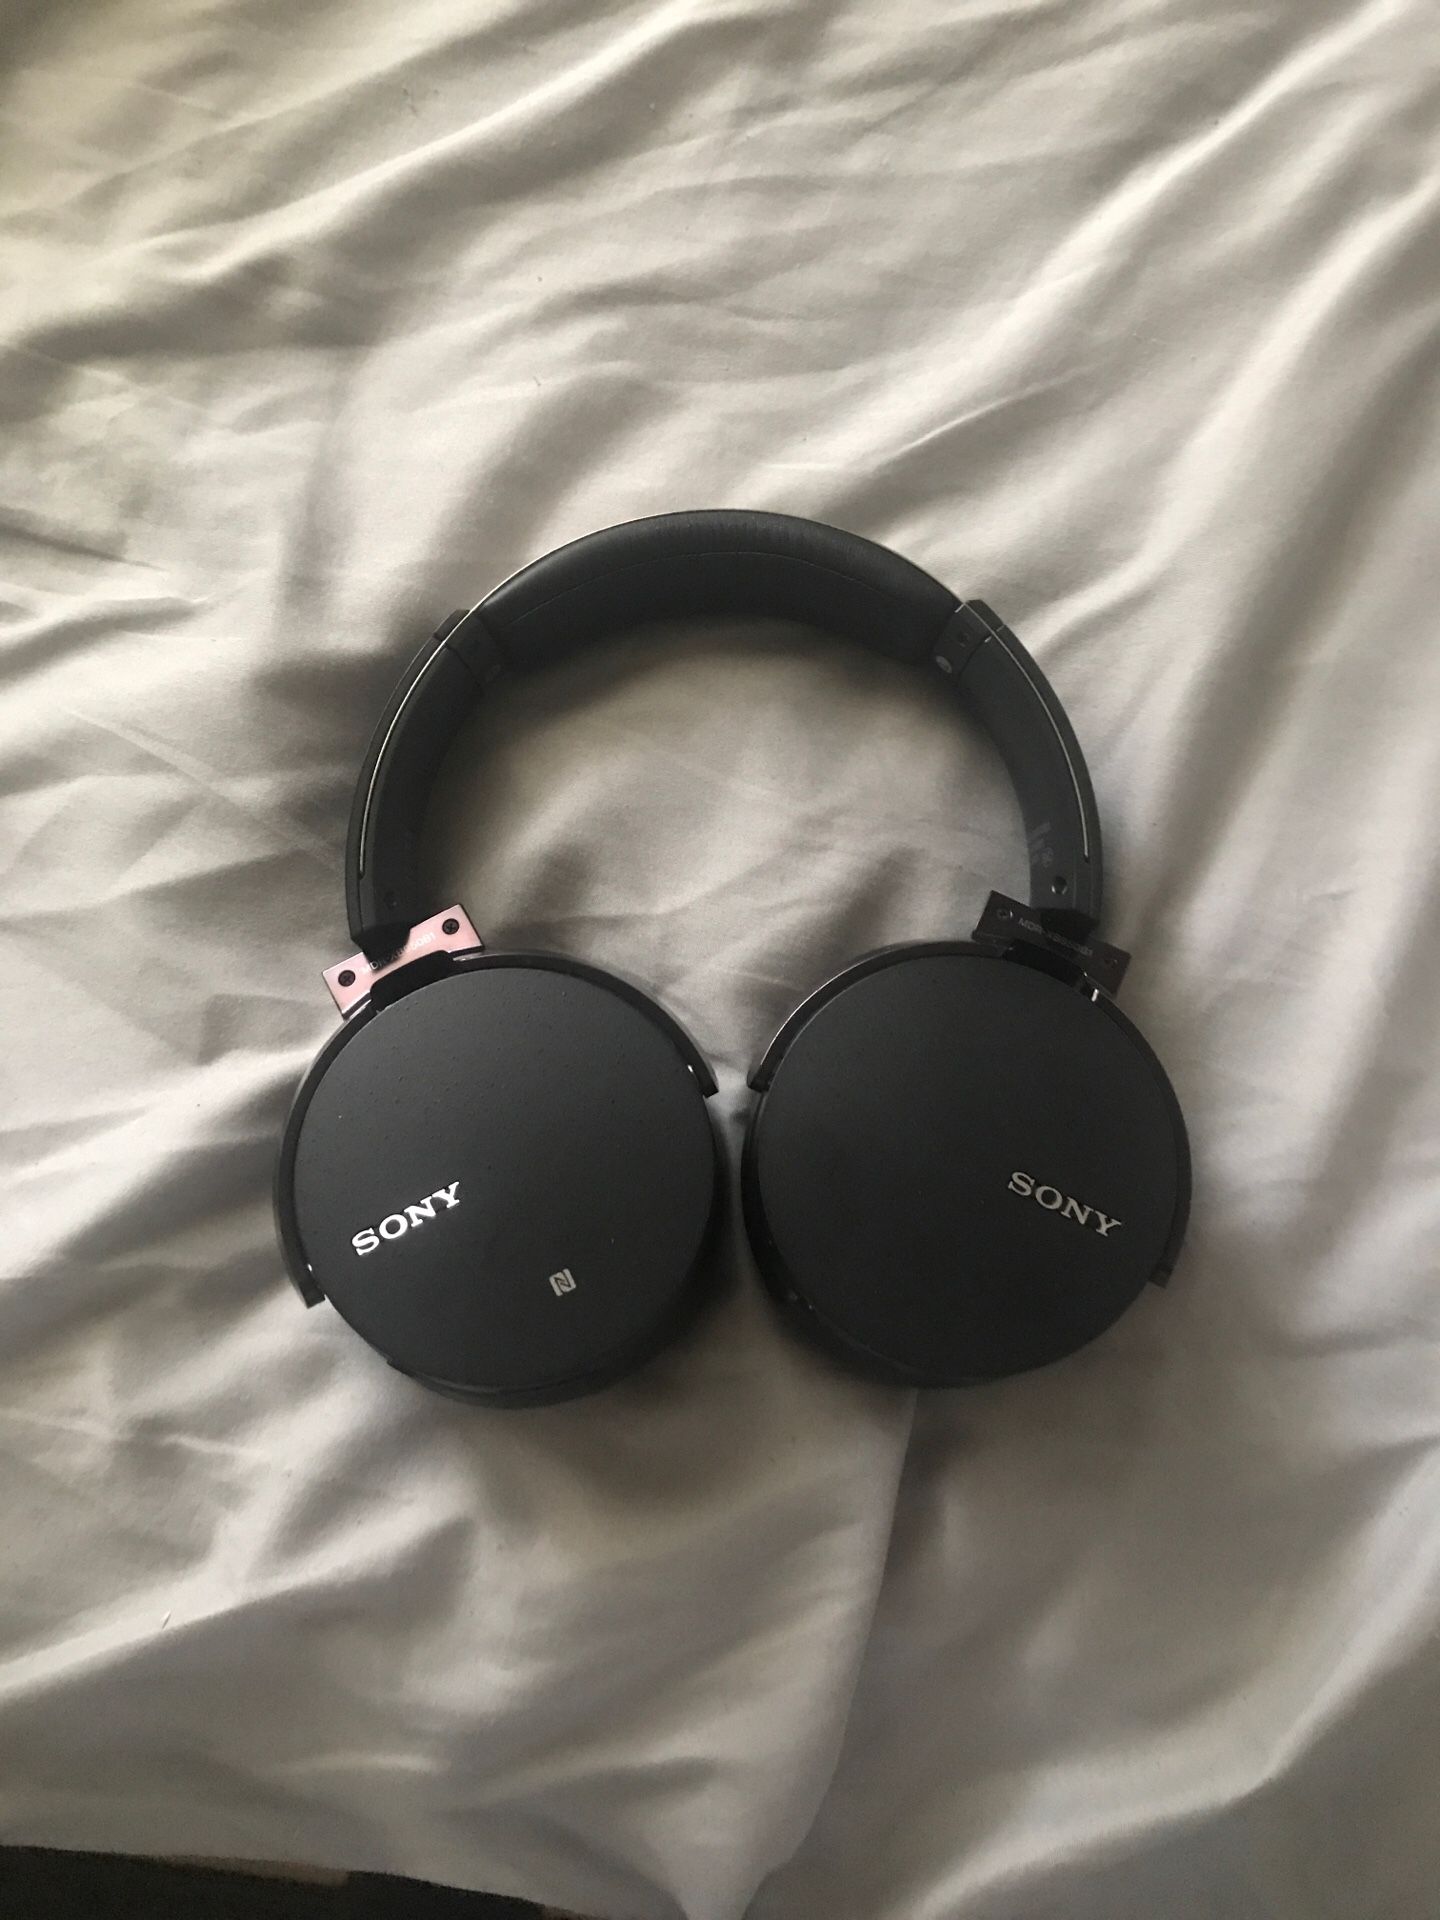 Sony mdr Bluetooth headphones